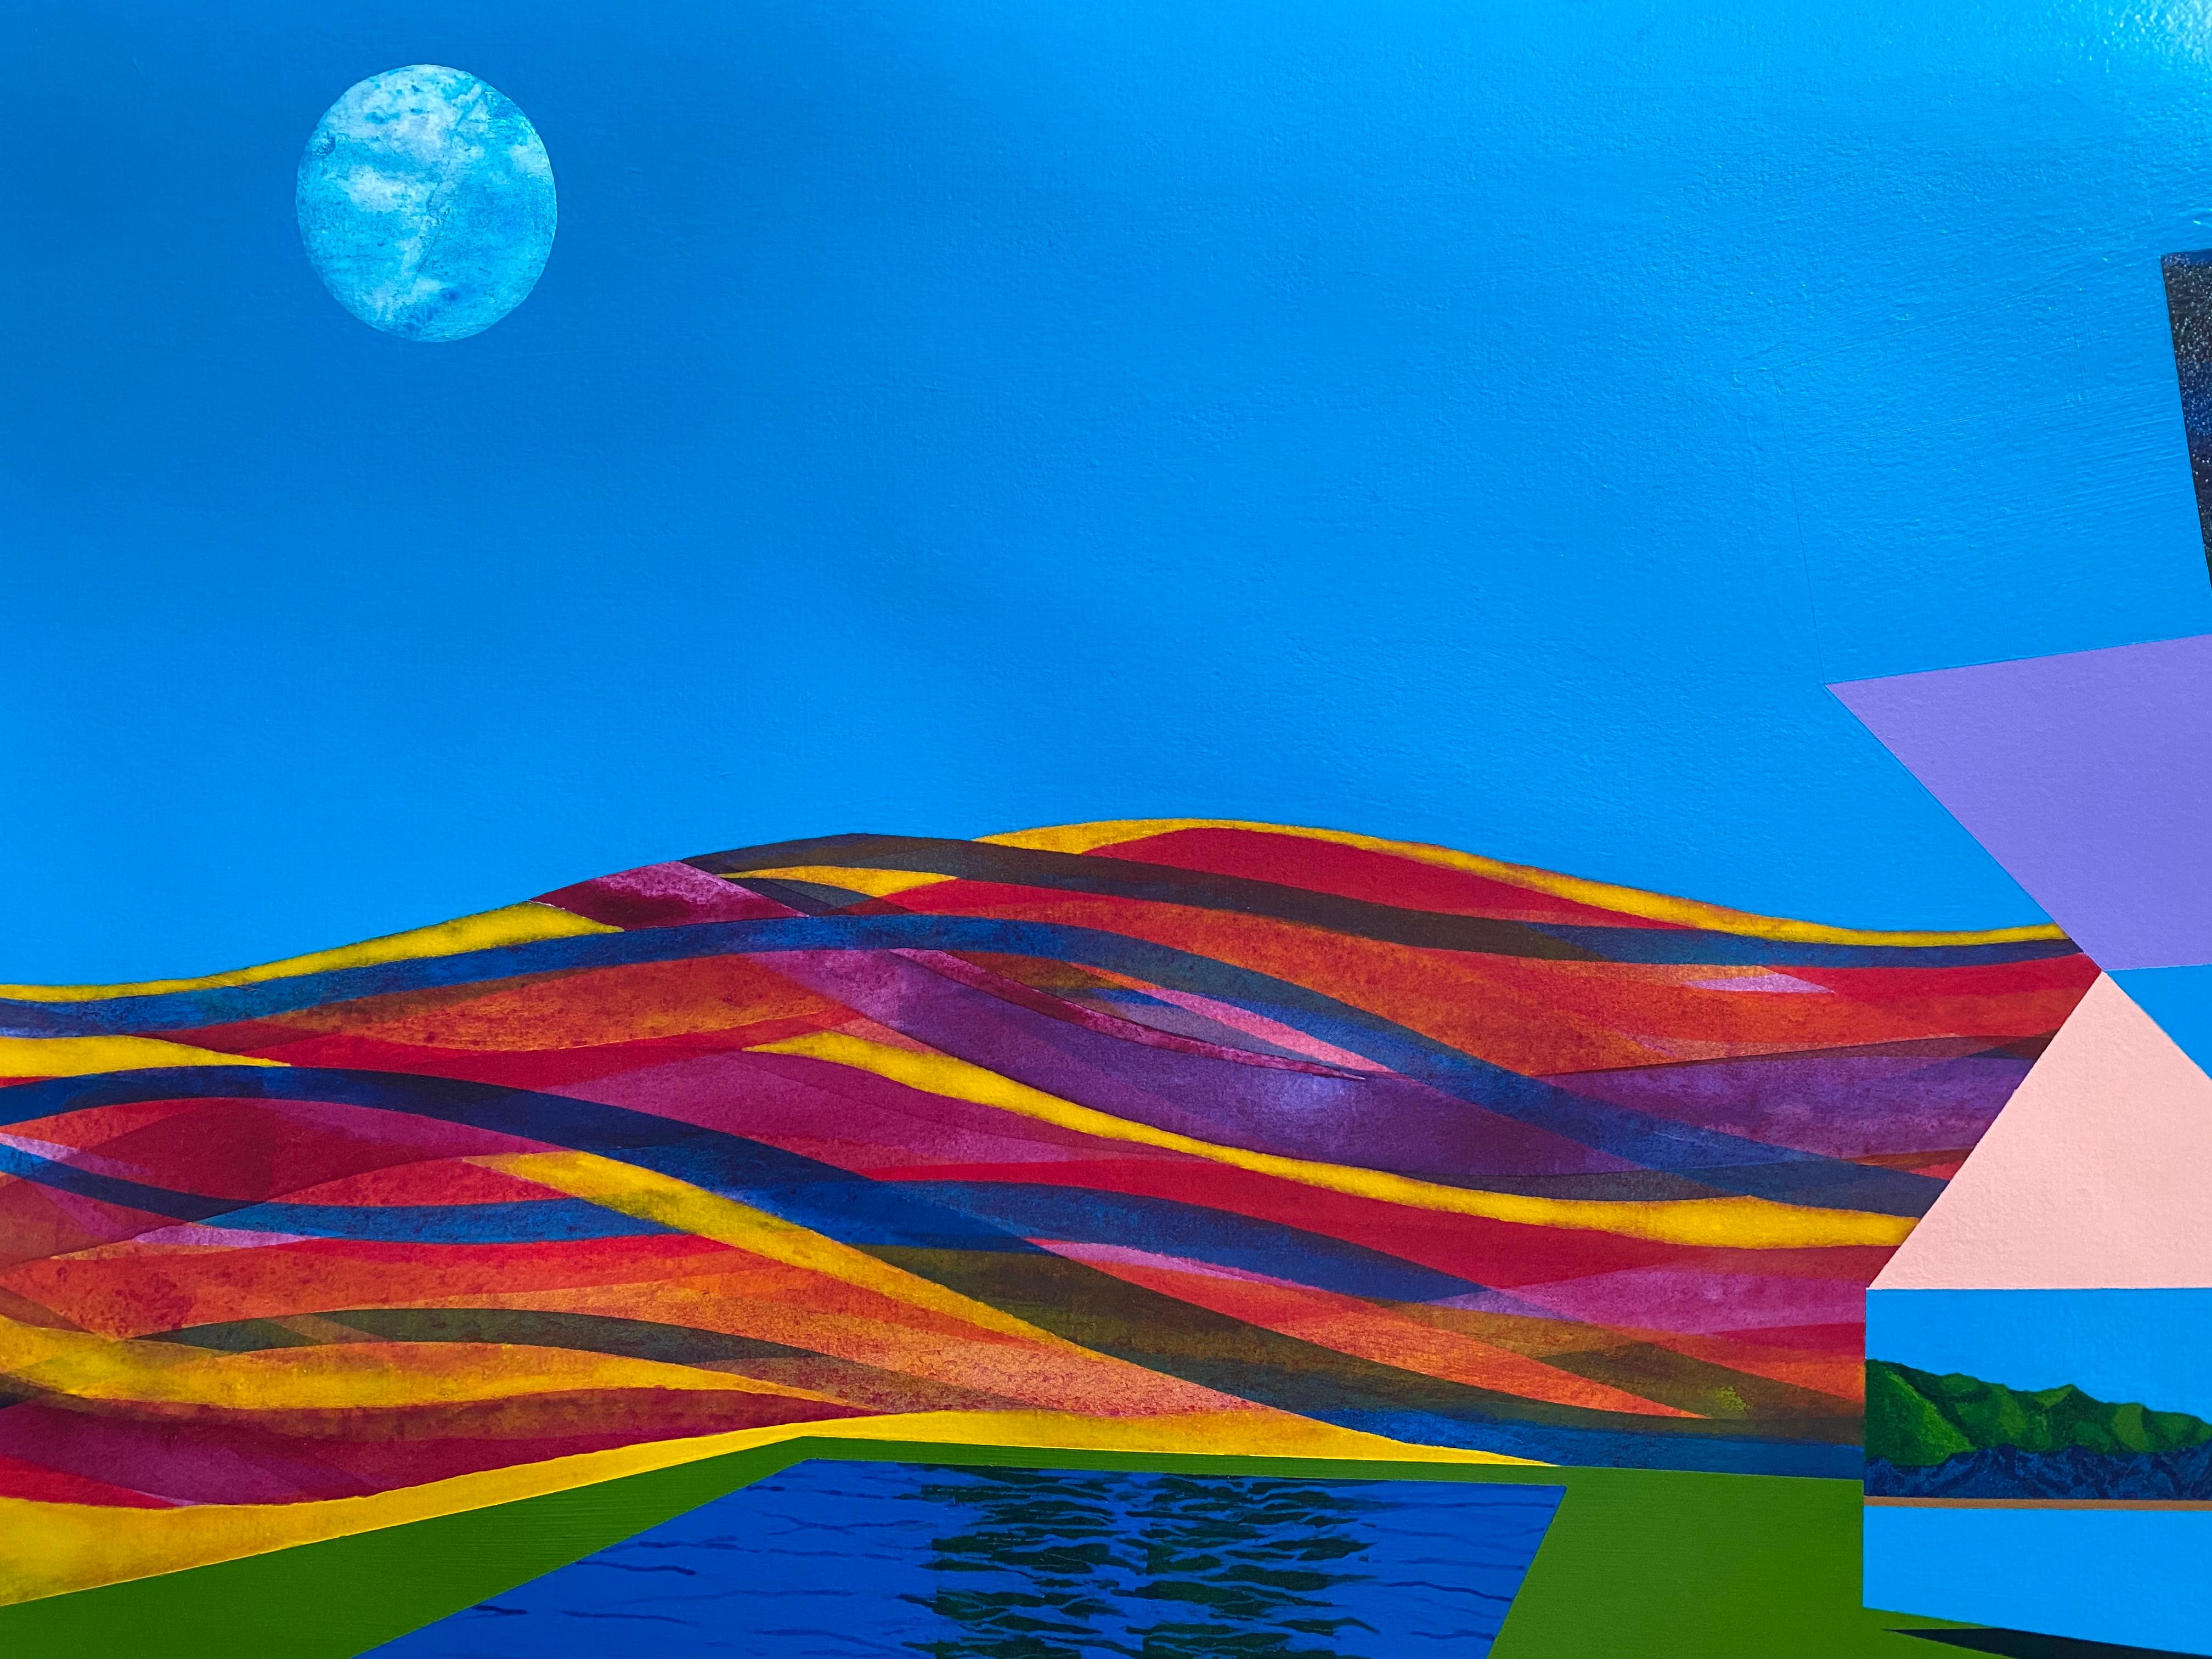 New Understanding, bright, multicolored surreal landscape on paper - Blue Landscape Art by James Isherwood